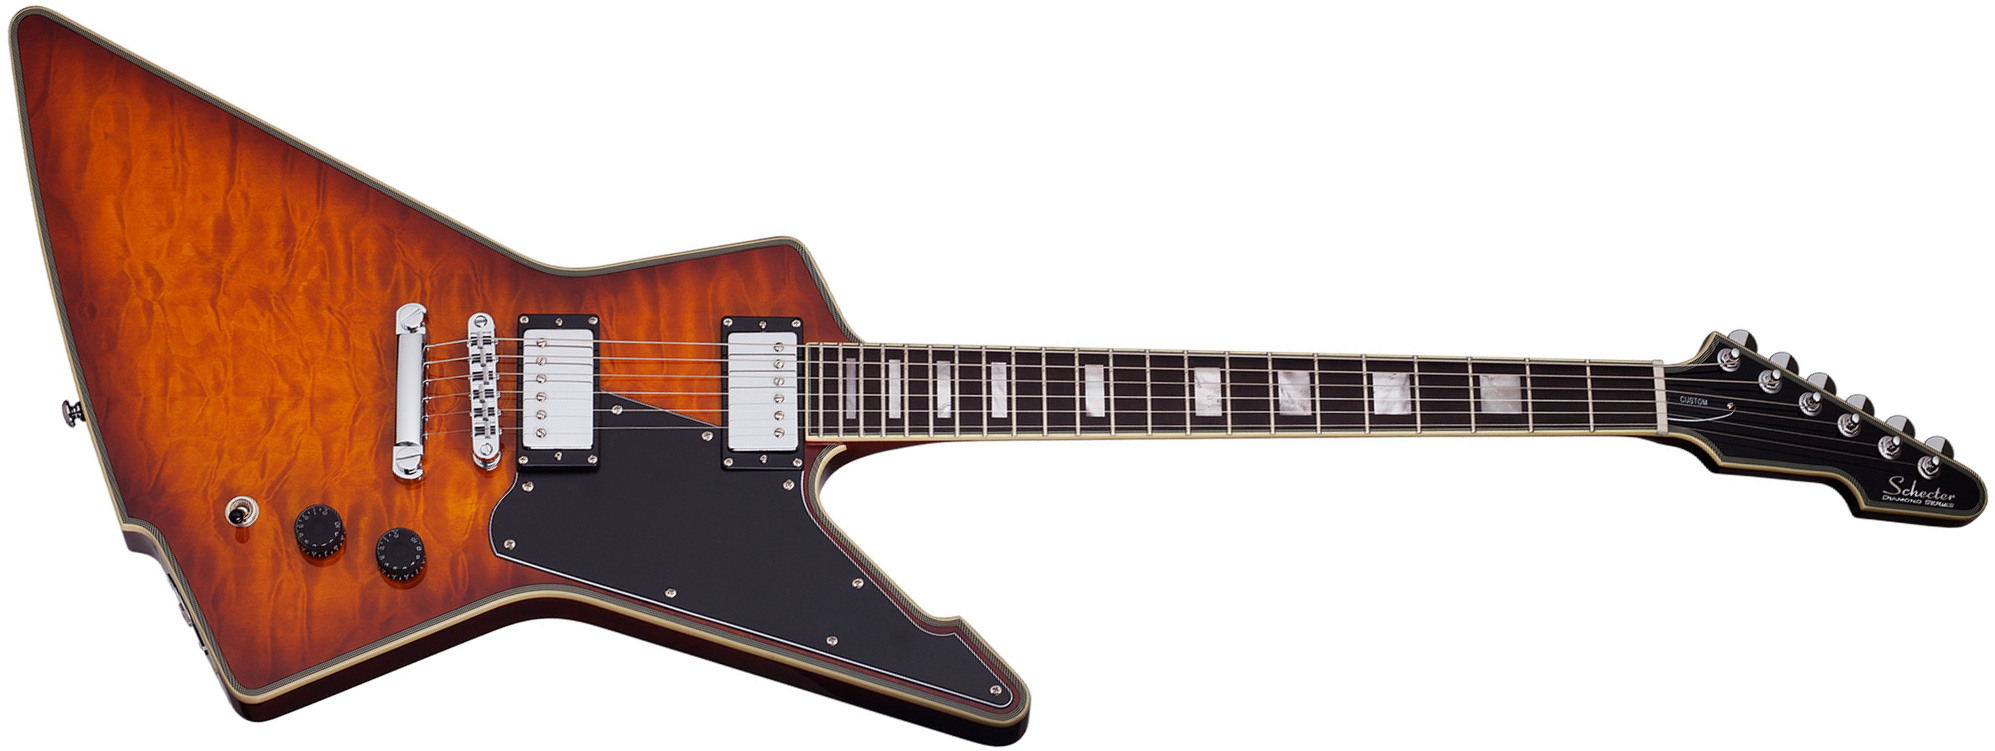 Schecter E-1 Custom 2h Ht Eb - Vintage Sunburst - Metal electric guitar - Main picture